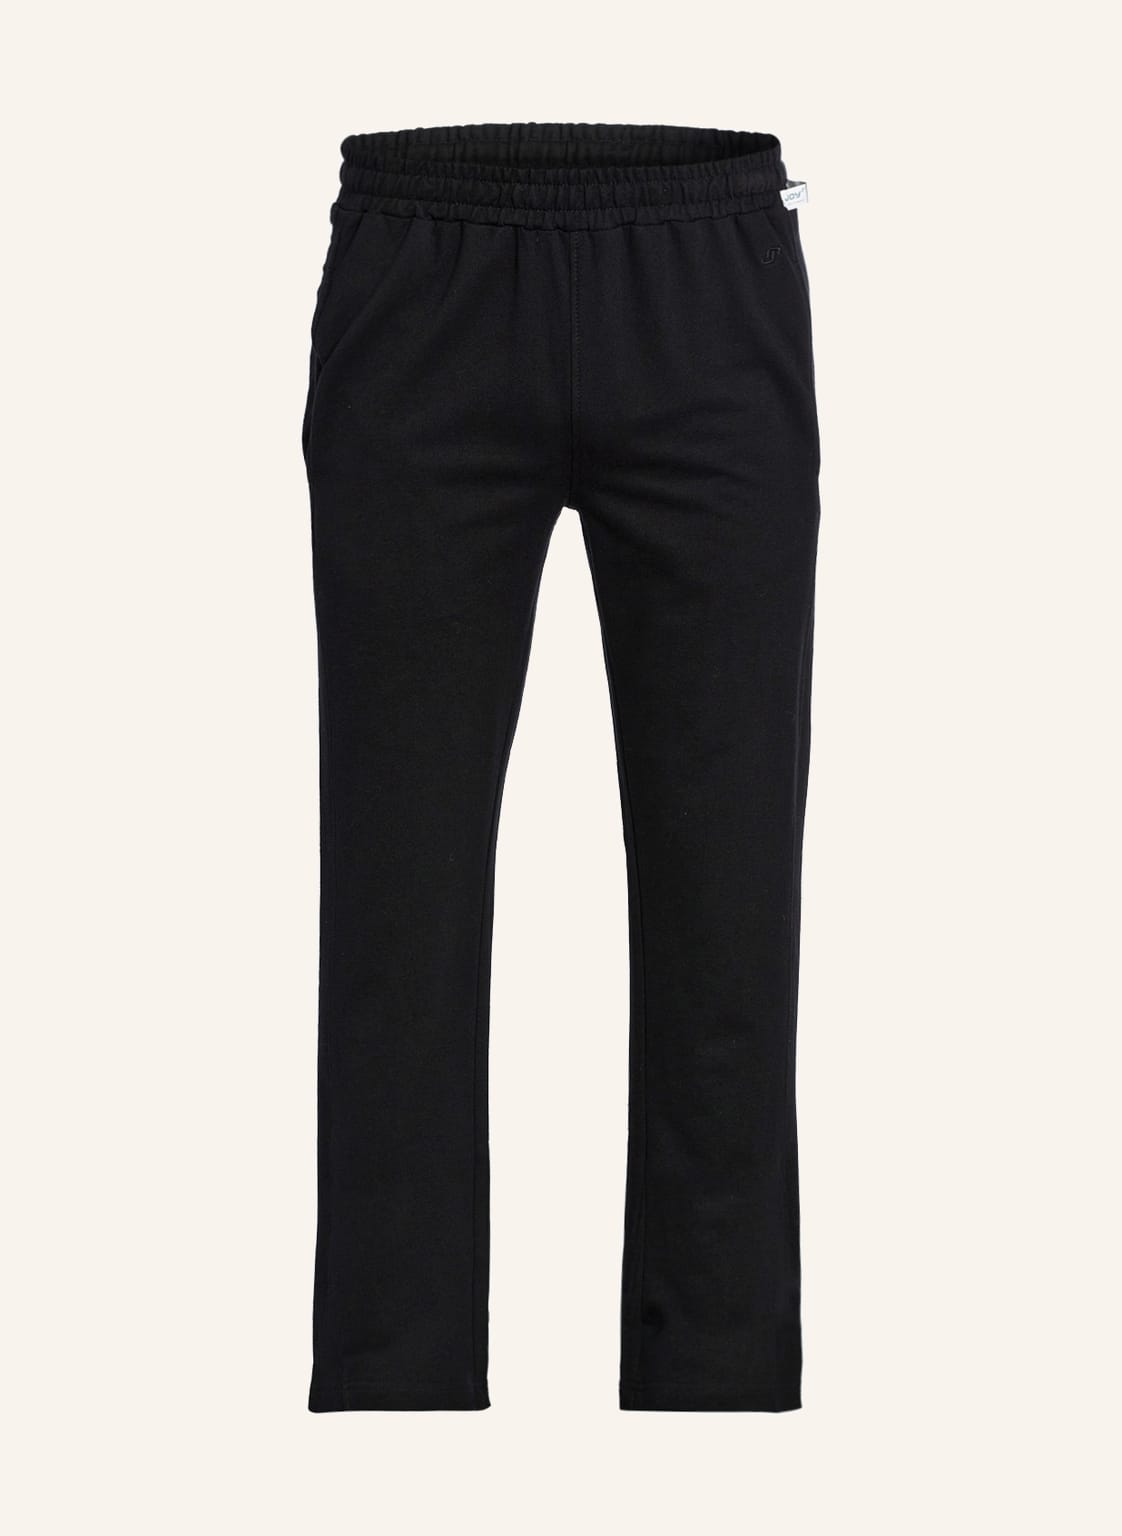 Joy Sportswear Sweatpants Marcus schwarz von JOY sportswear